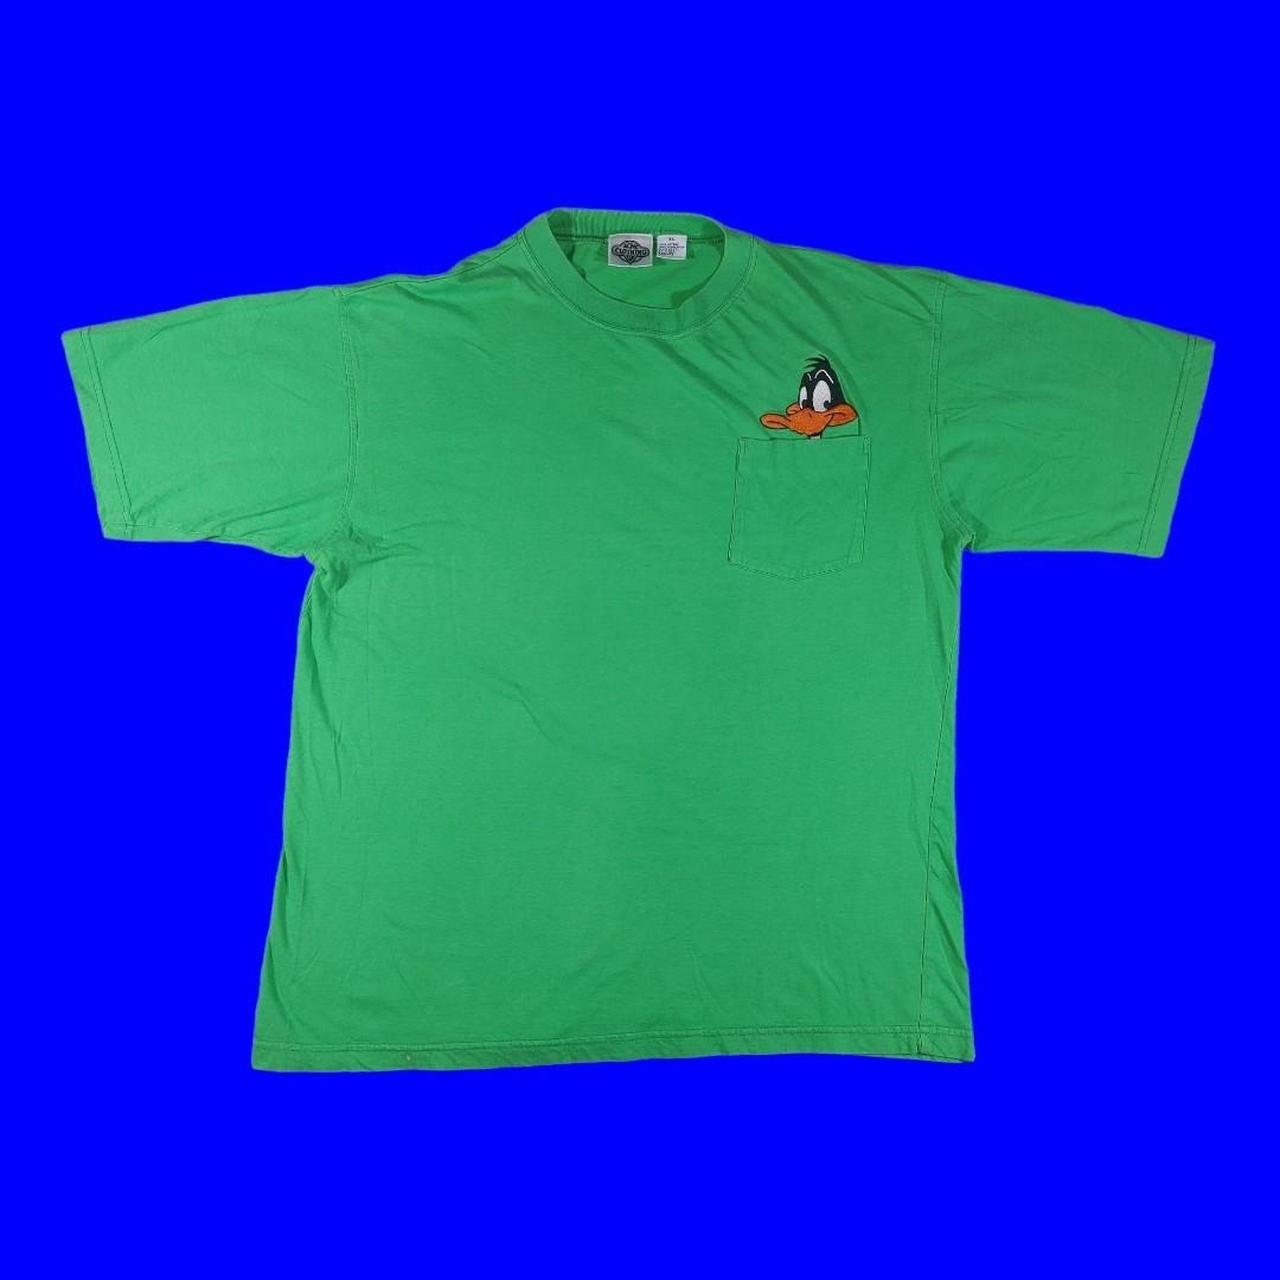 Acme Clothing Men's Black and Green T-shirt